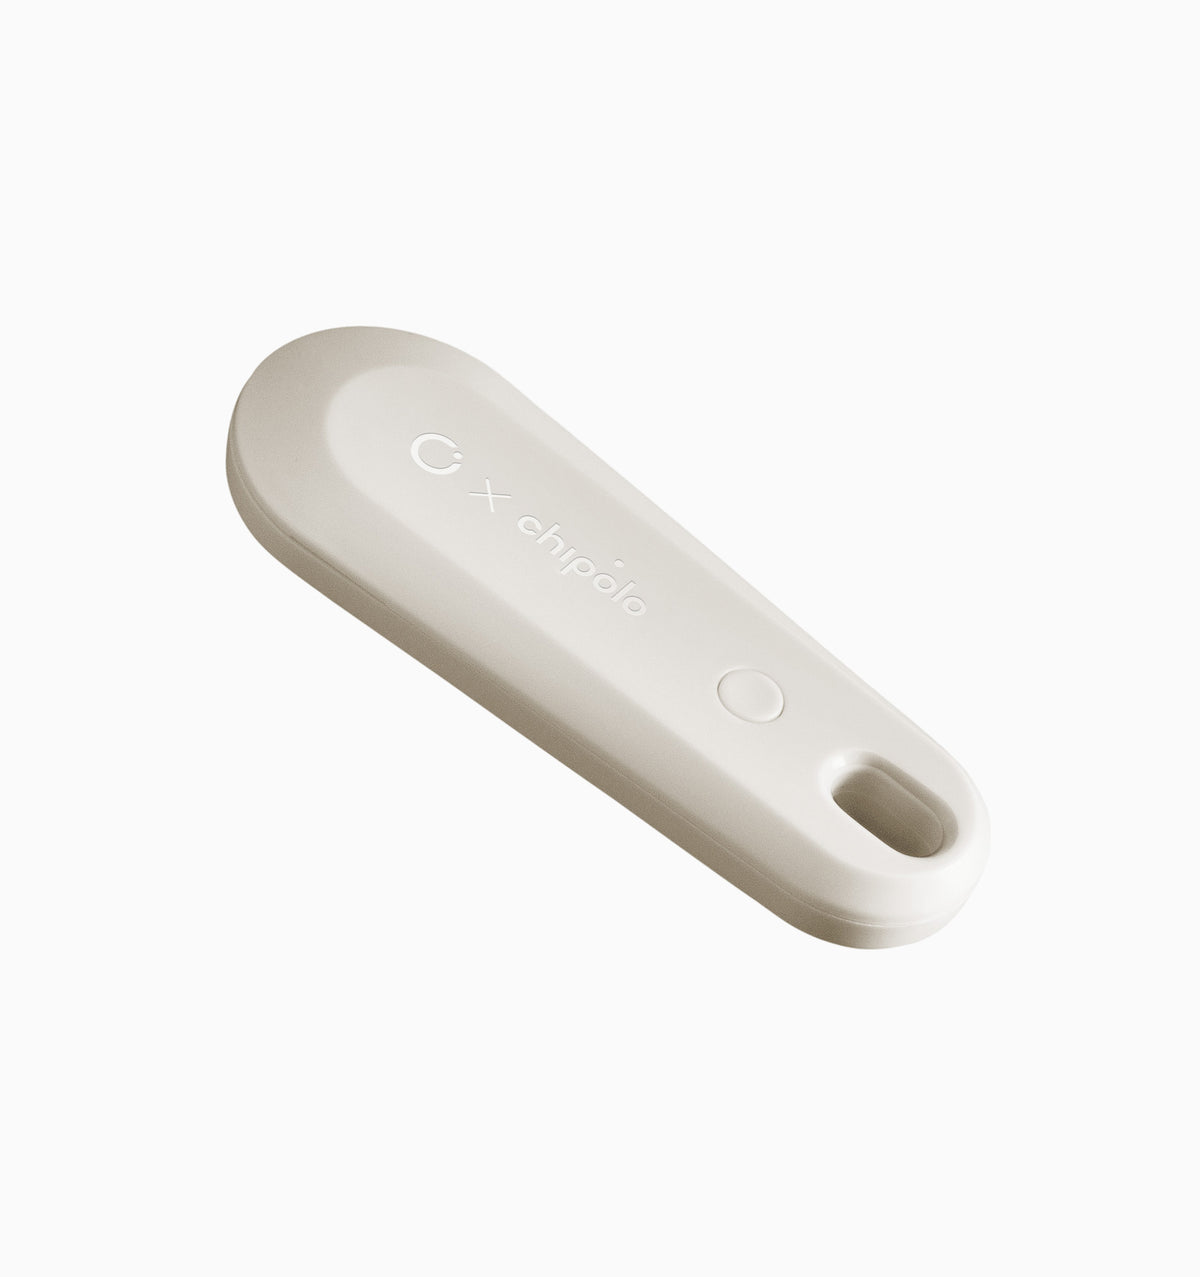 Orbitkey x Chipolo Bluetooth Tracker v2 - Stone